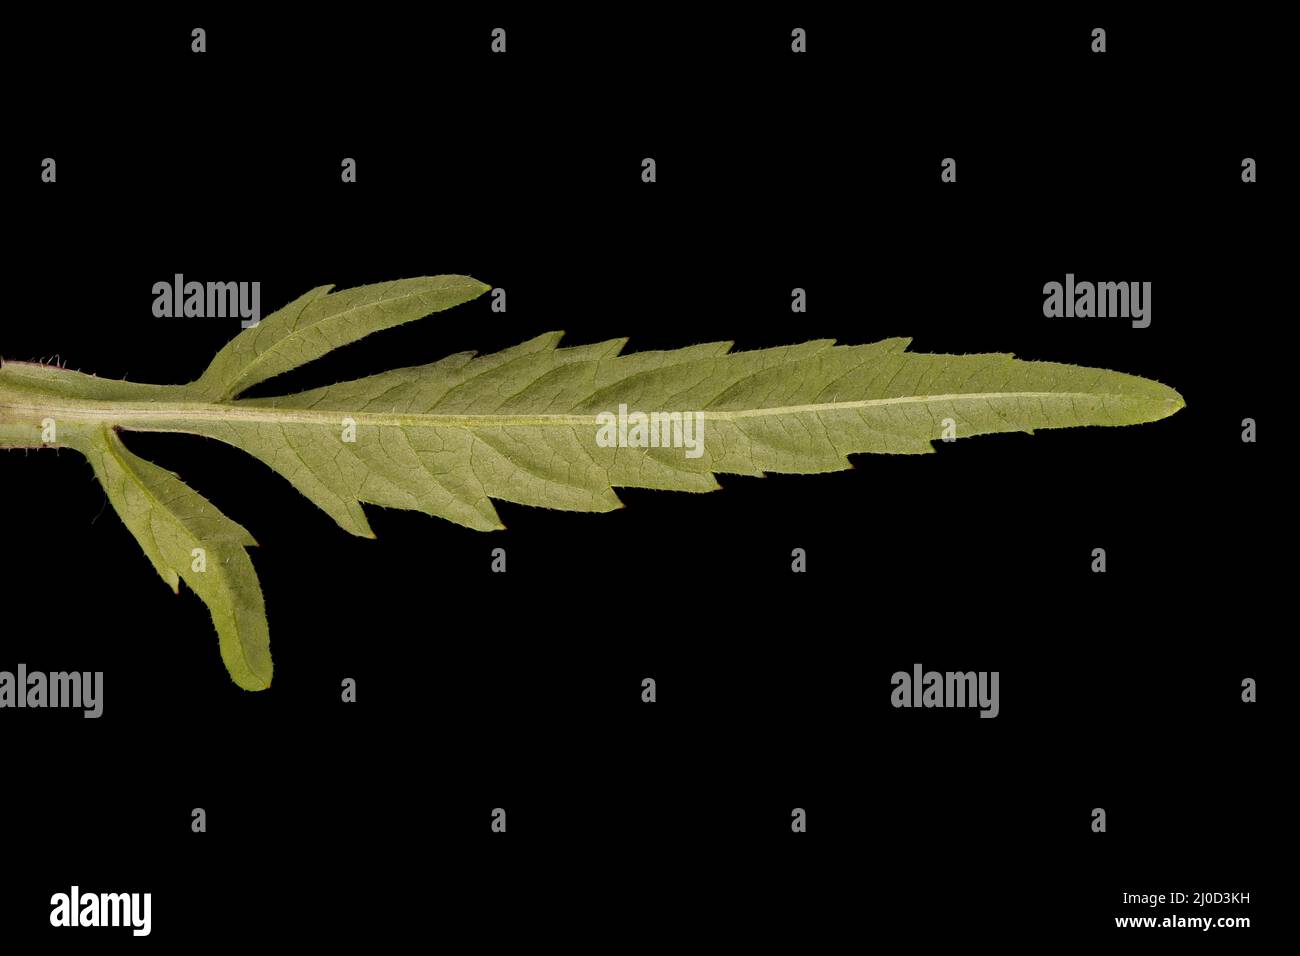 Trifid Bur-Marigold (Bidens tripartita). Leaf Closeup Stock Photo